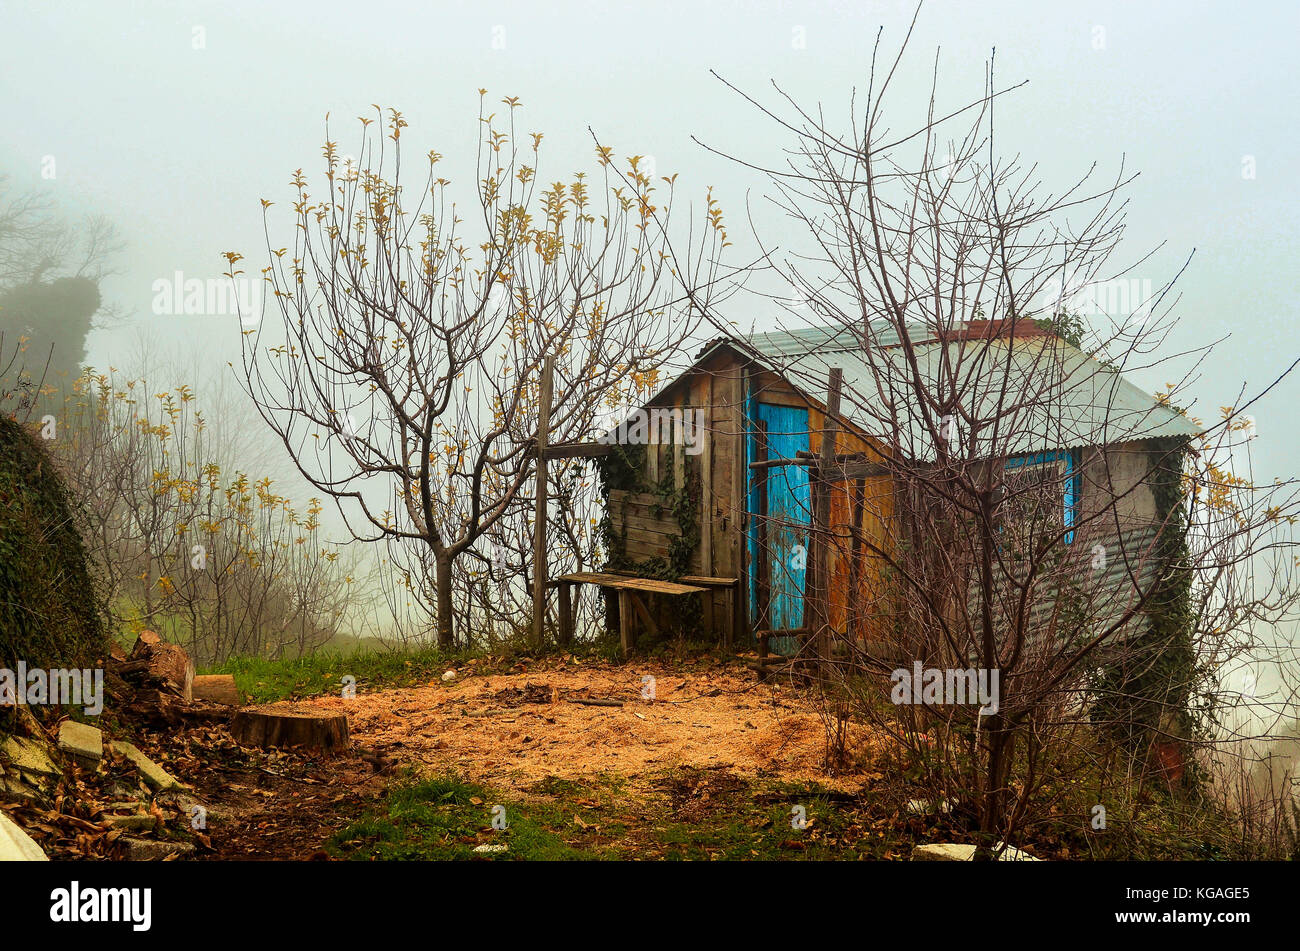 Abandoned hut in a misty landscape Stock Photo